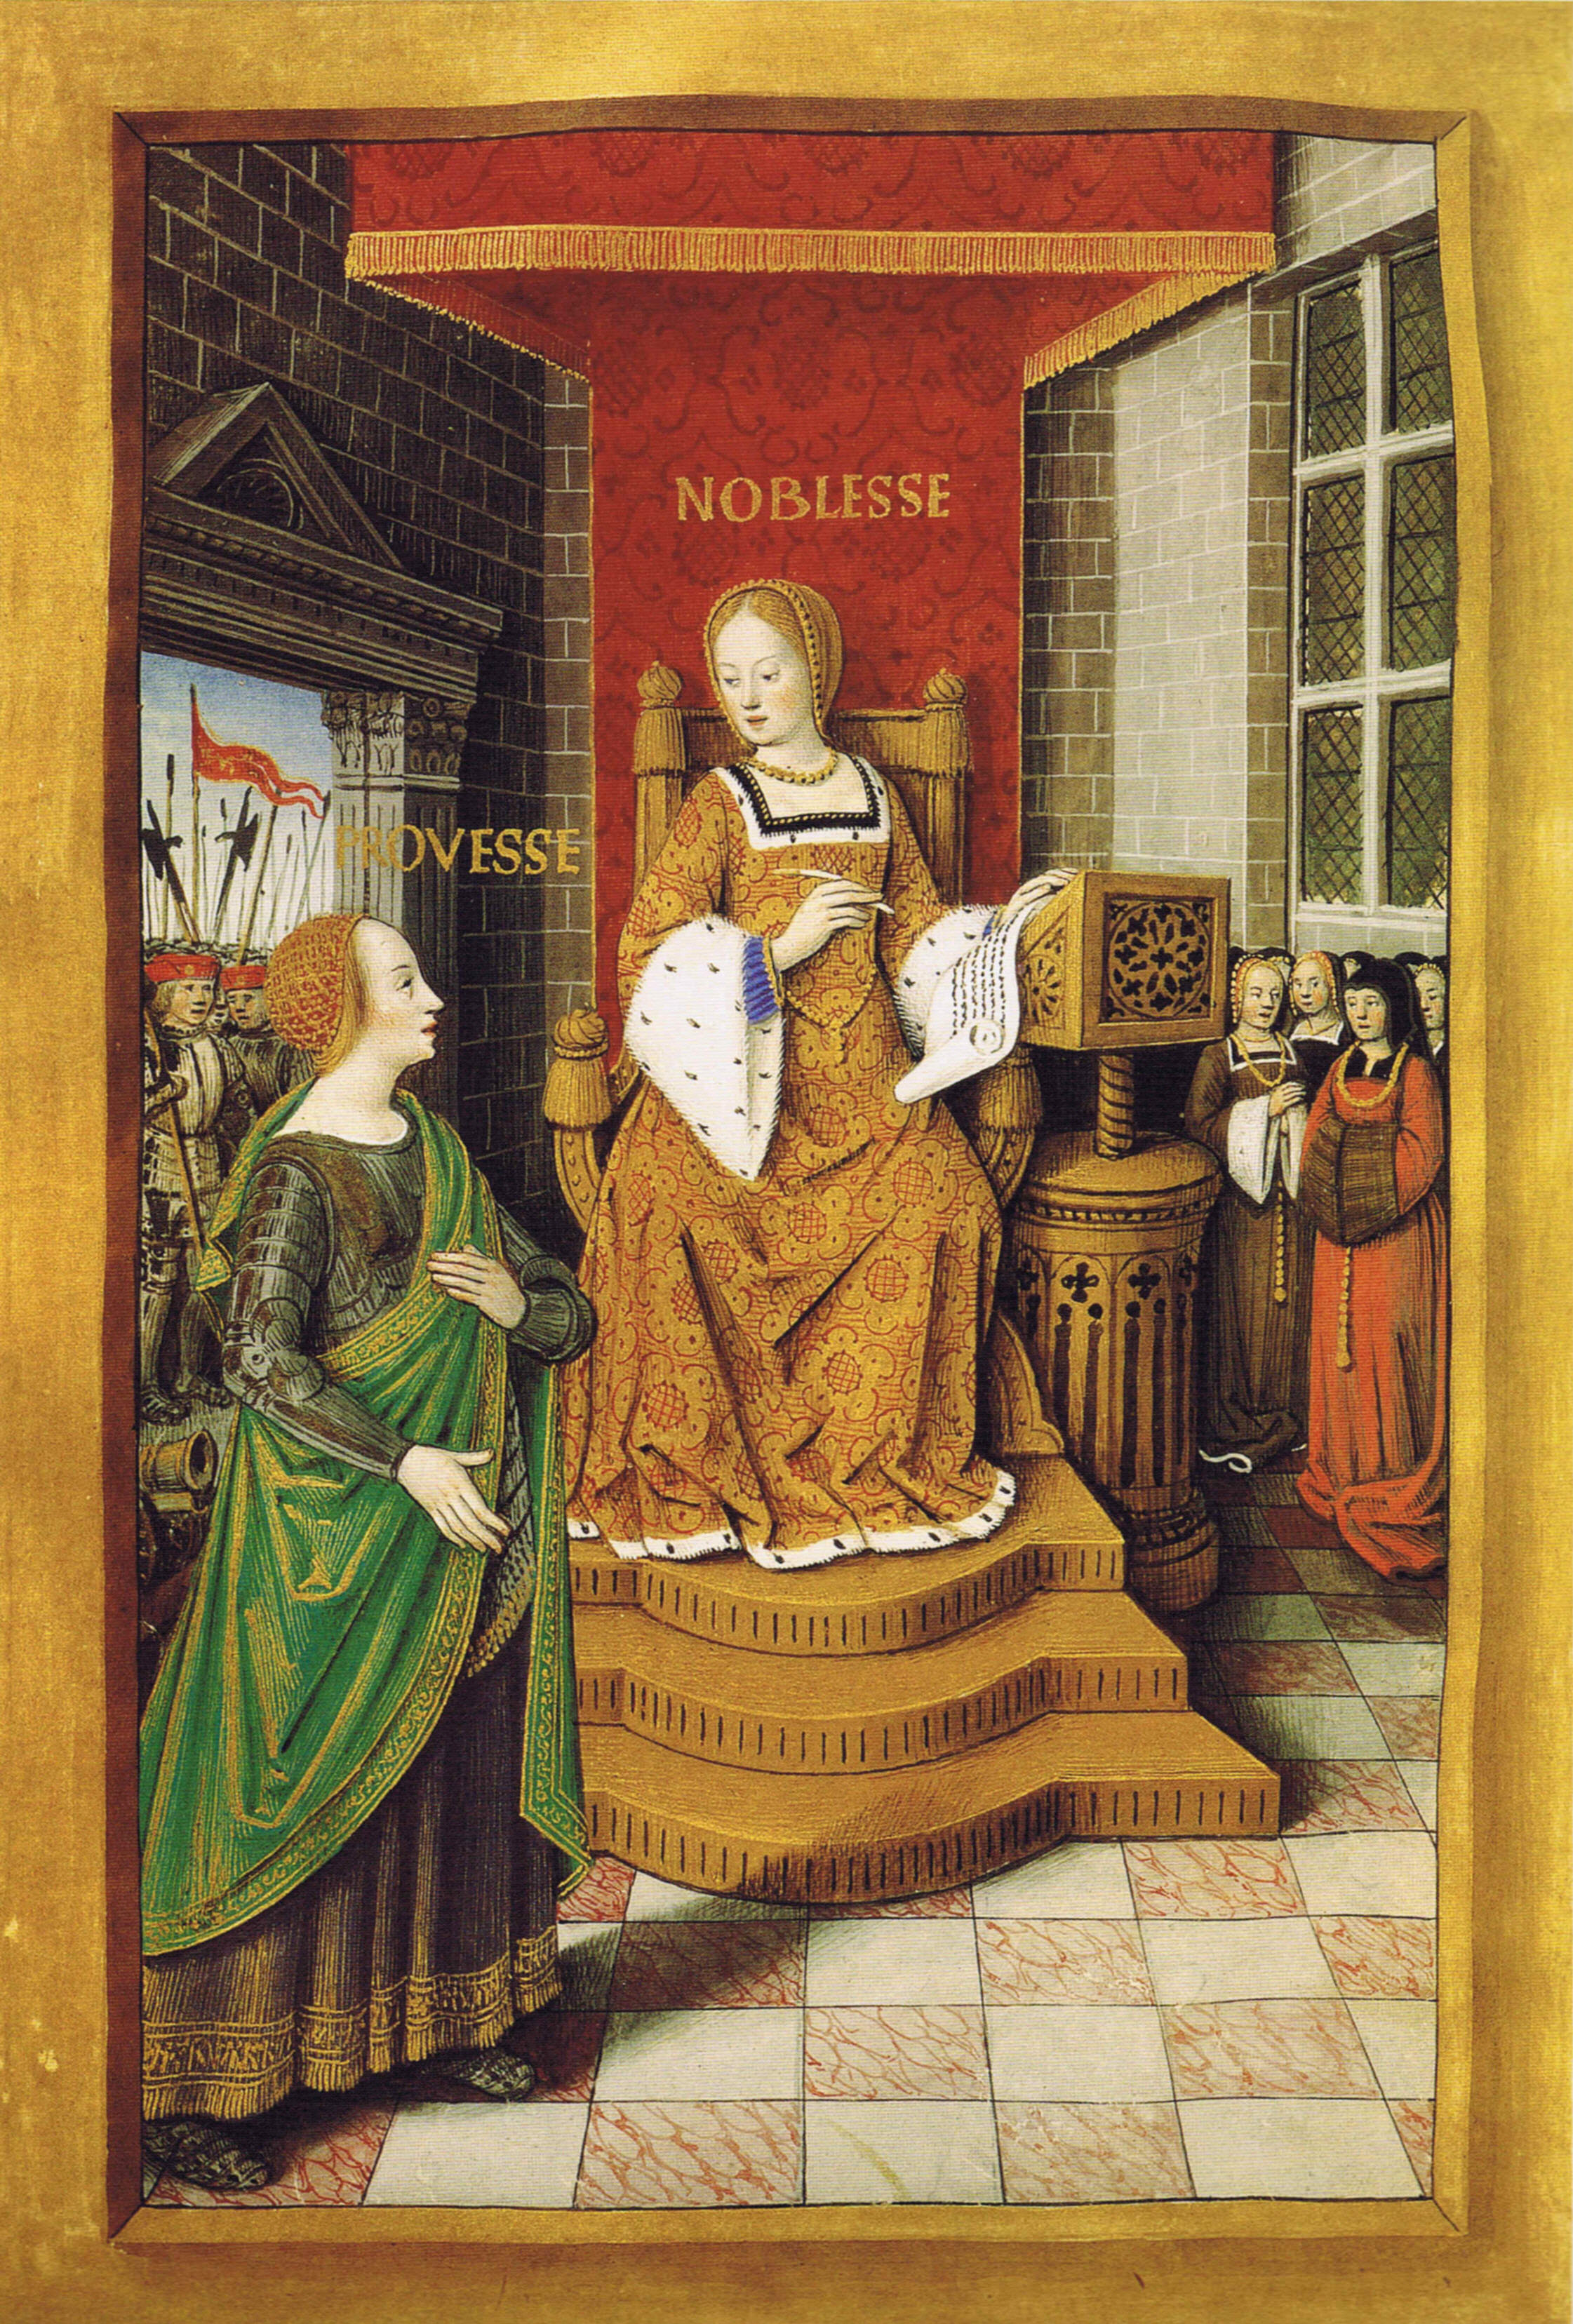 1504 (approx) - Epistres Envoyees au Roi - Fictive exchange of letters between Anne de Bretagne and Louis XII